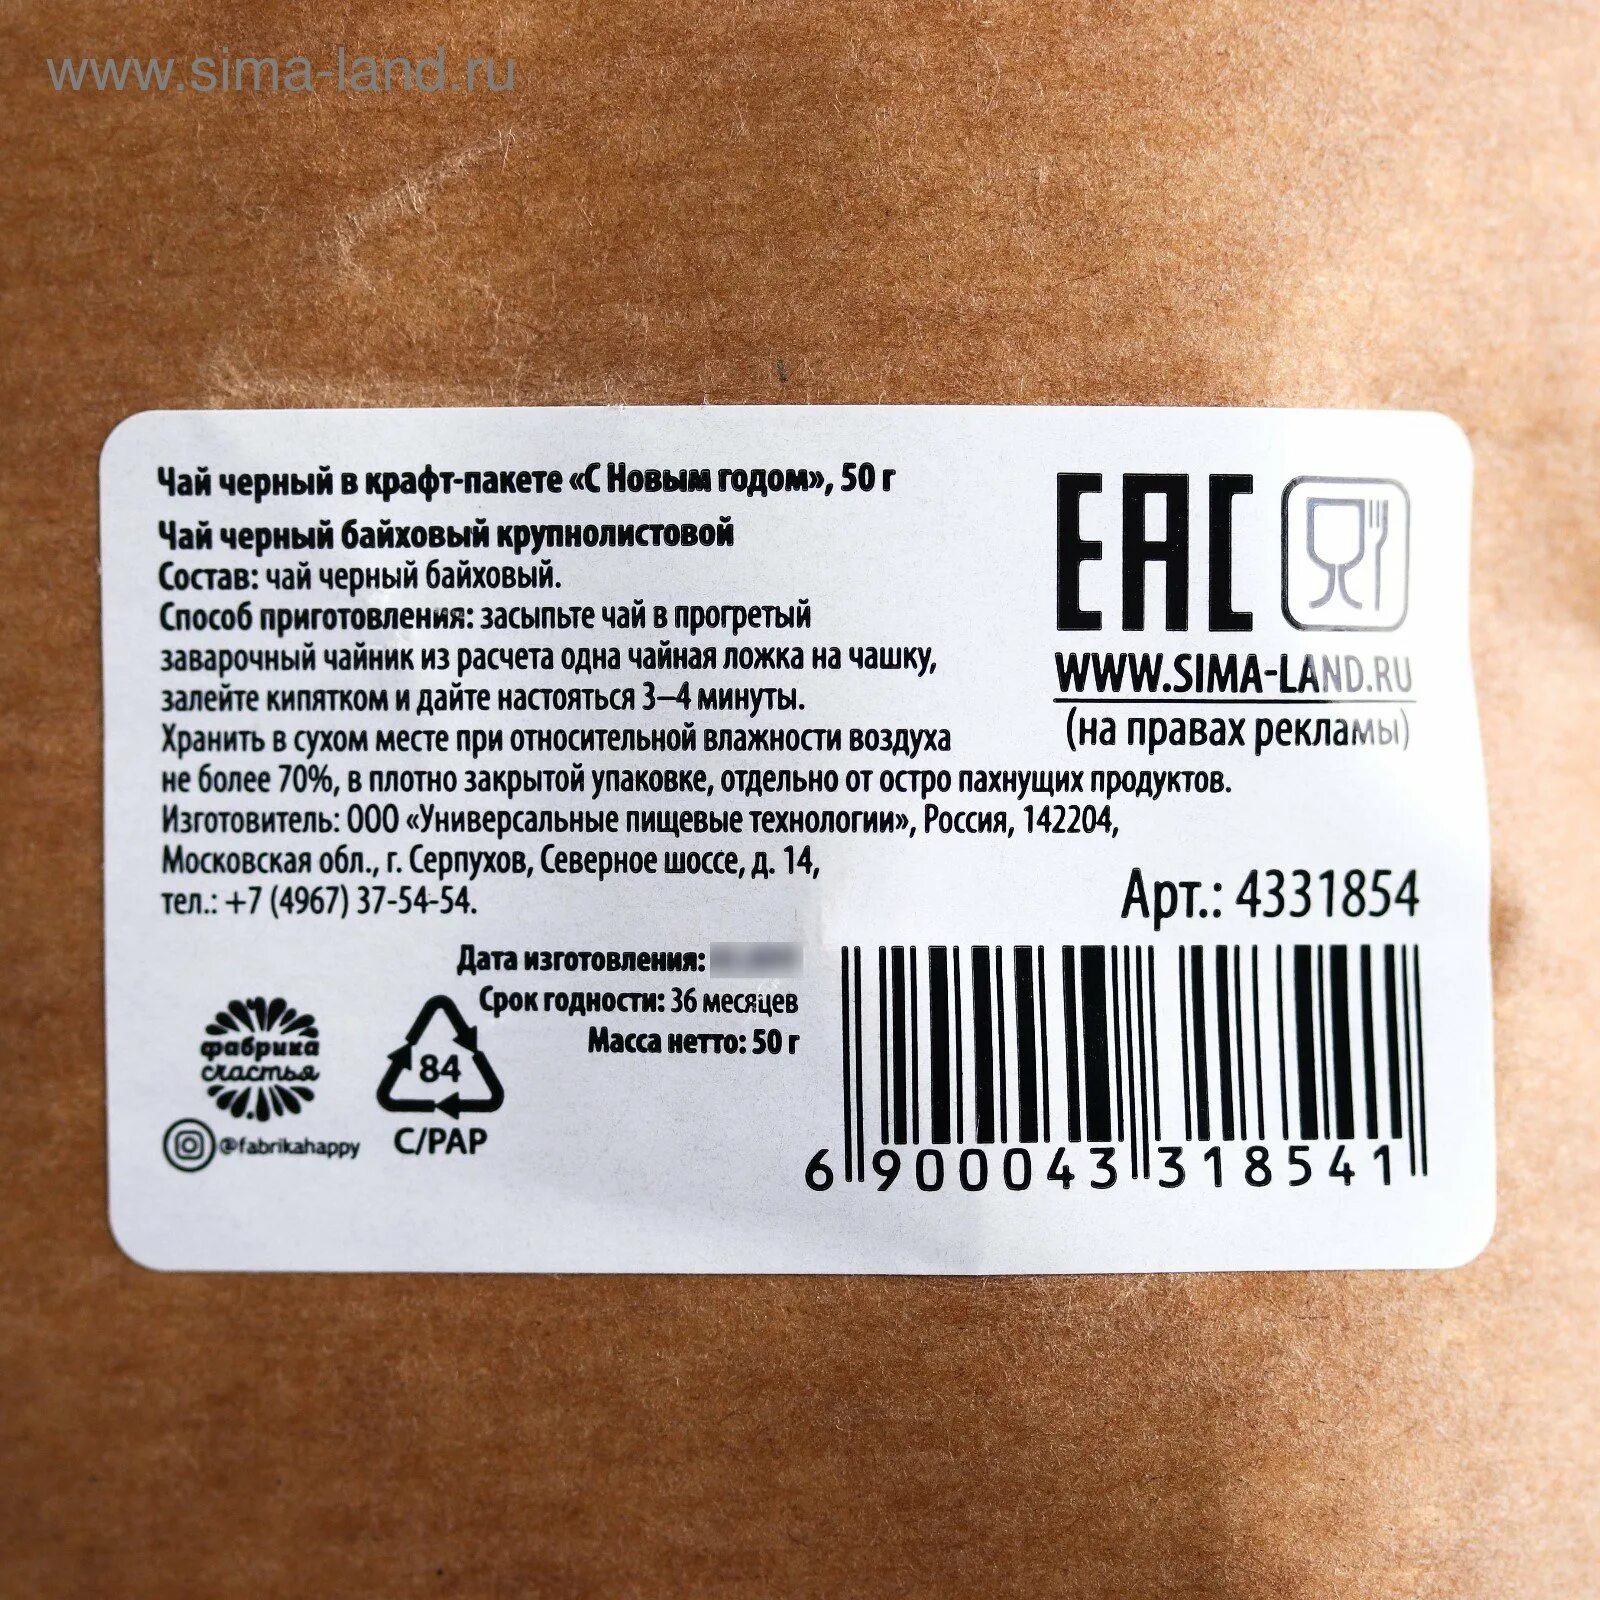 EAC на упаковке. Символ EAC на упаковке. Значки на упаковке EAC. Значок ЕАС на упаковке.